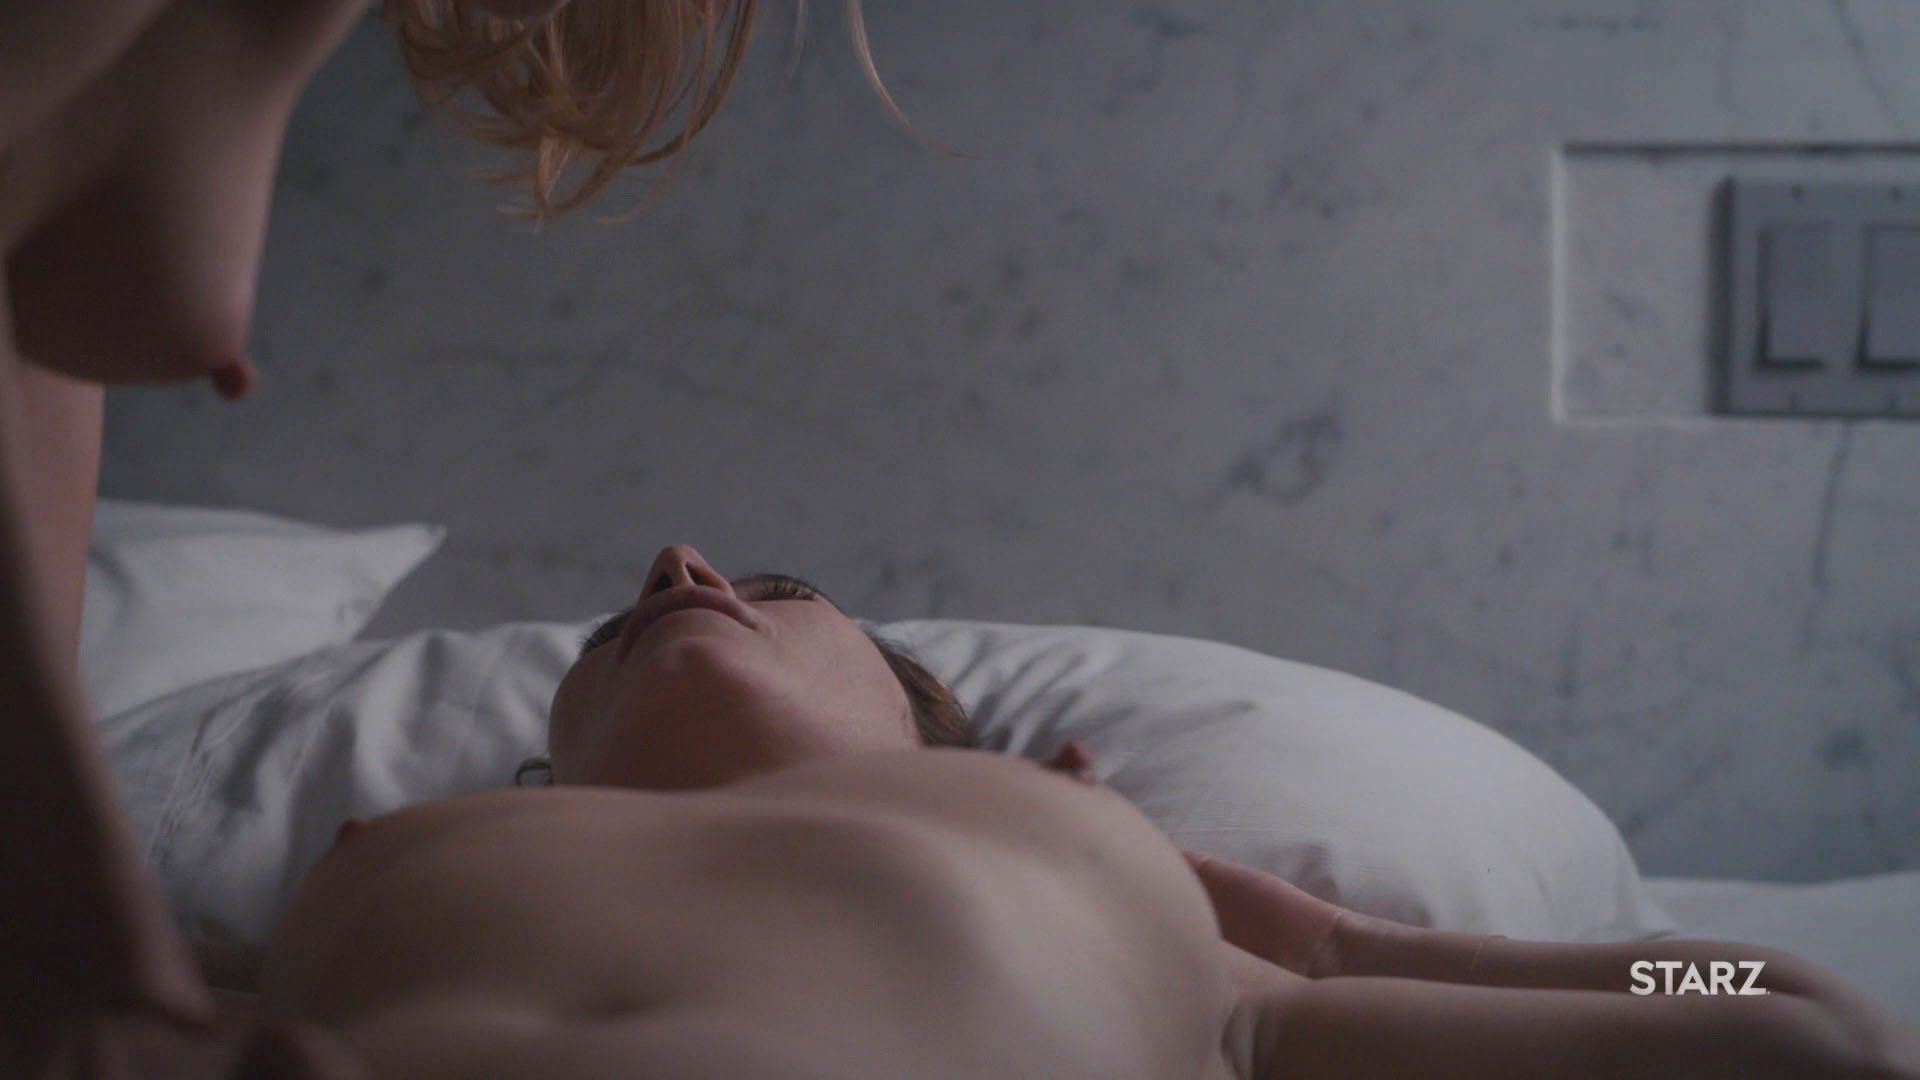 Nude Video Celebs Louisa Krause Nude Anna Friel Nude The Girlfriend Experience S E